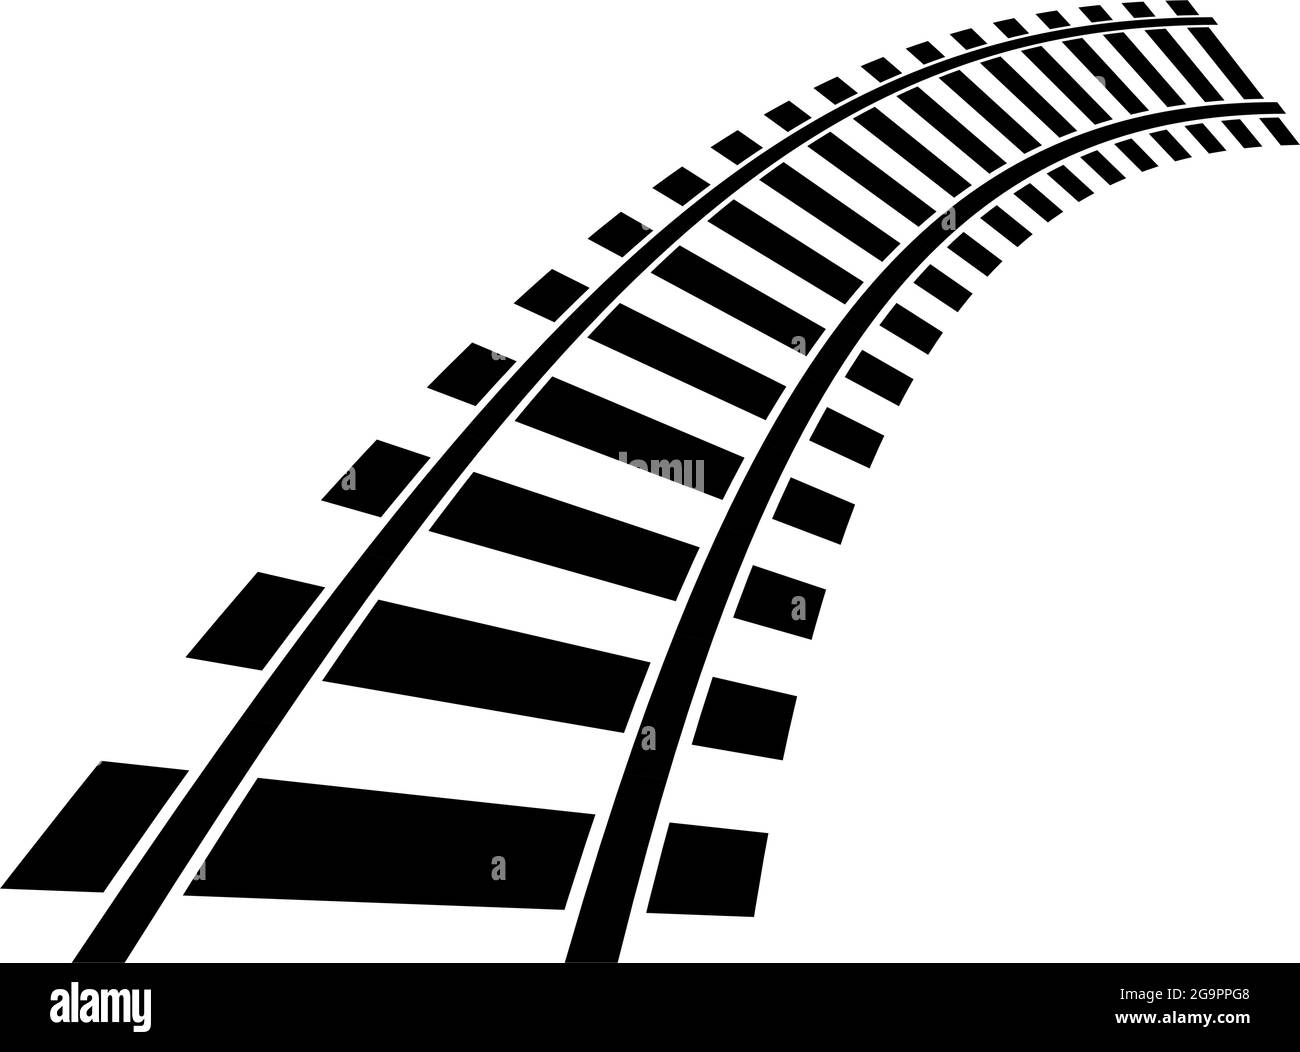 Train track, rail way silhouette element – stock vector illustration, clip-art graphics Stock Vector